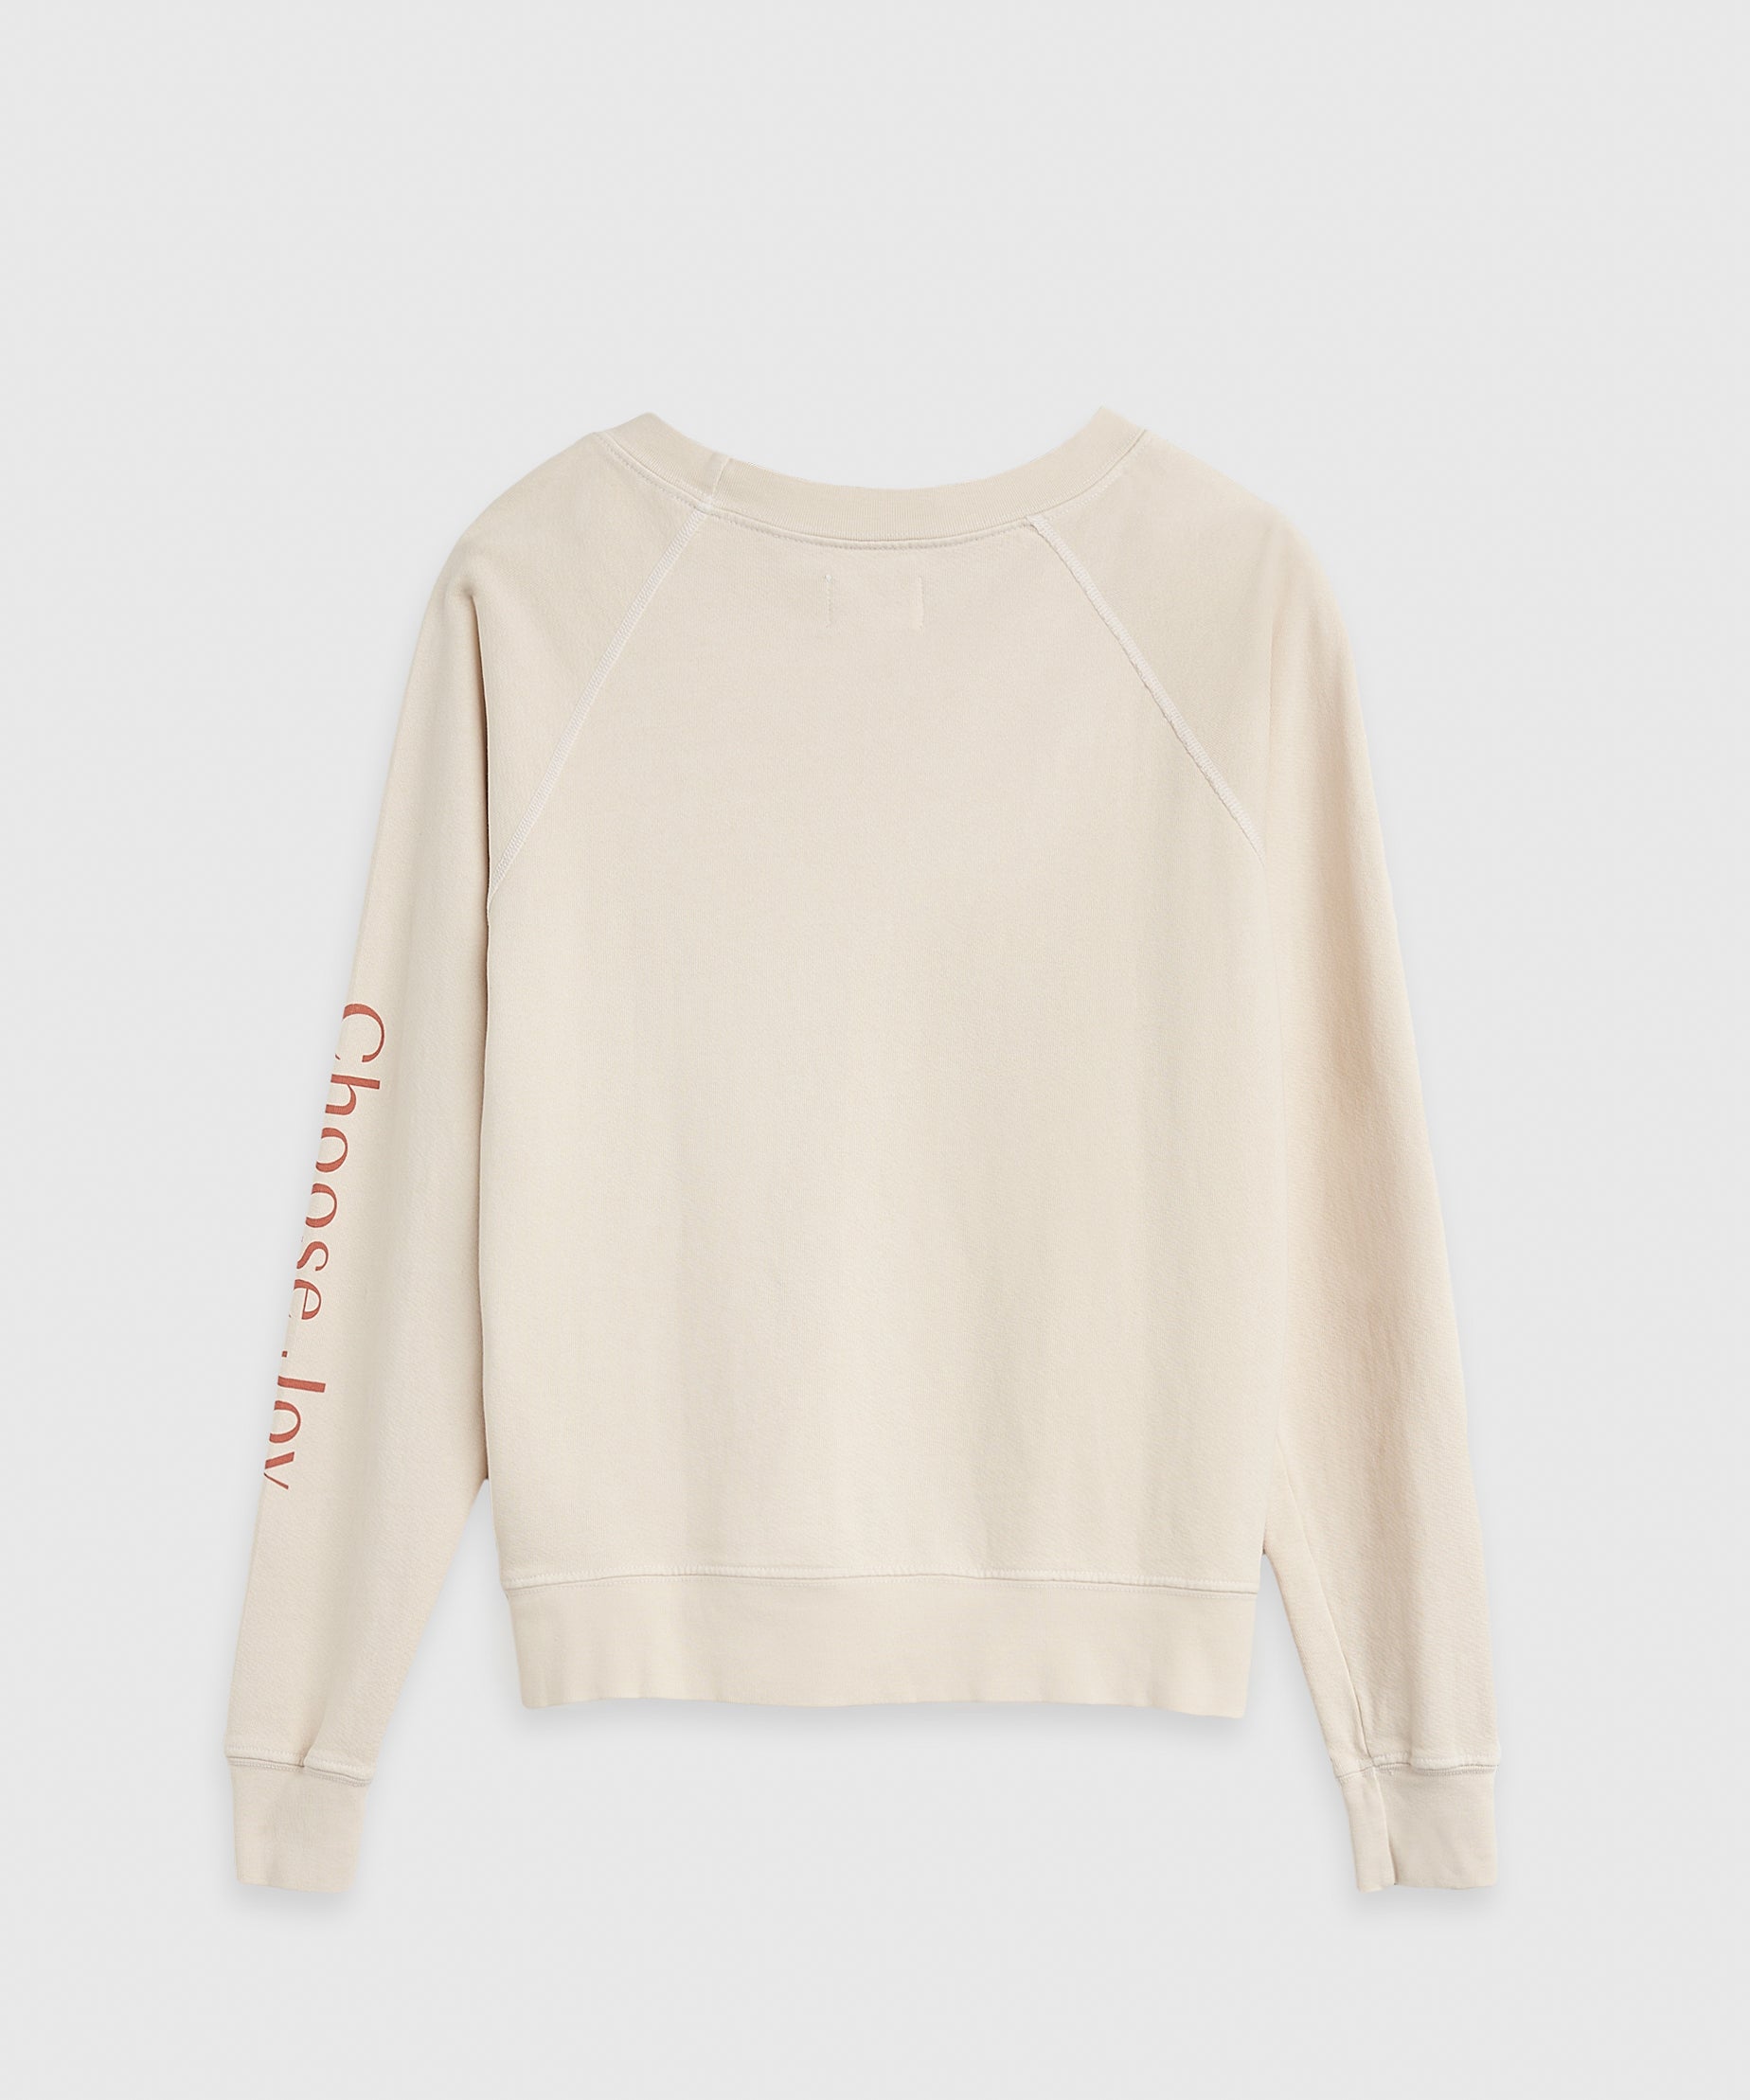 'Choose Joy' Organic Cotton Pullover | KonMari x Mate the Label